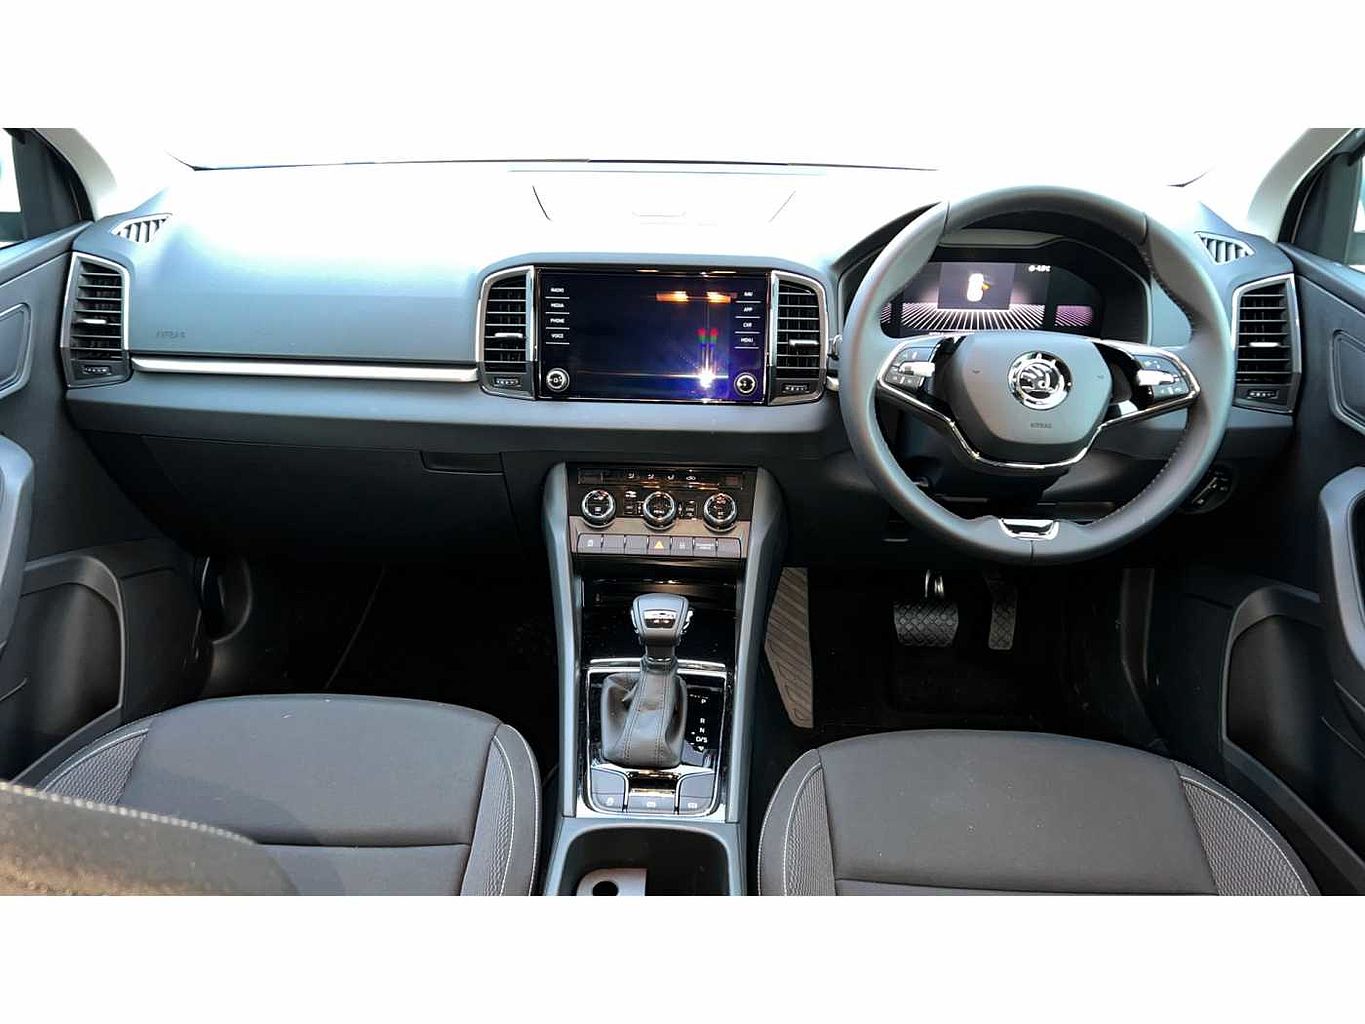 SKODA Karoq SUV 2.0TDI (116ps) SE Drive SCR DSG